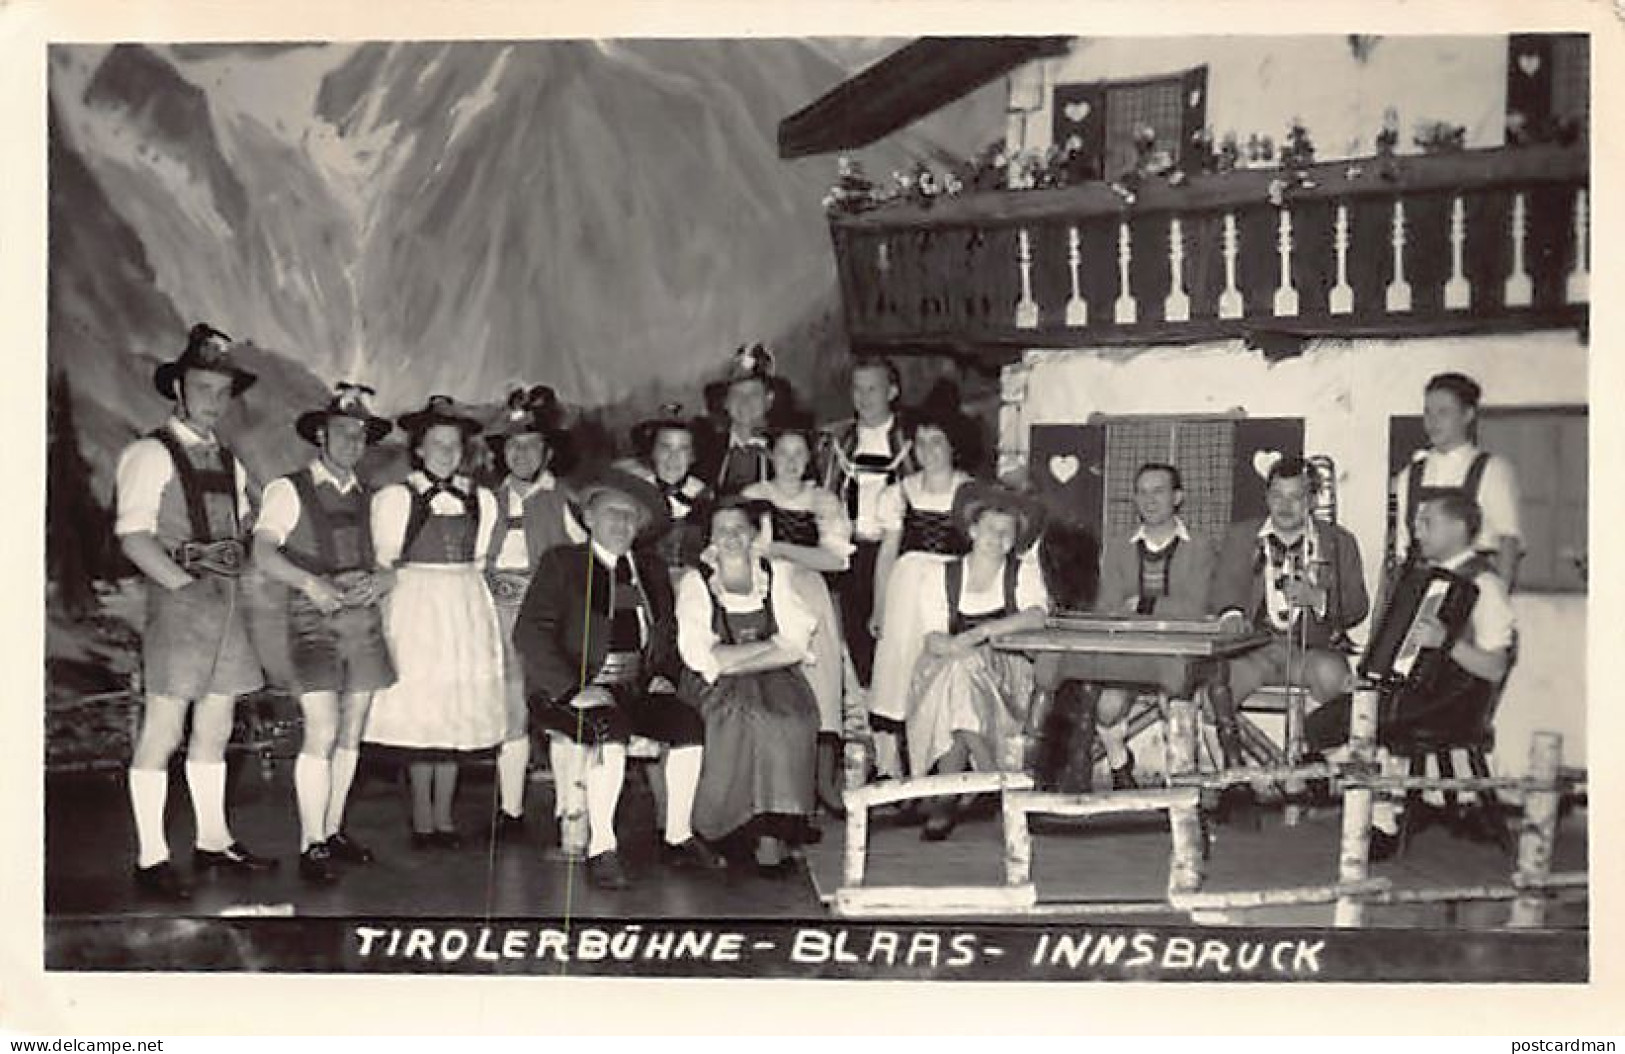 INNSBRUCK (T) Tirolerbühne Blaas - Innsbruck